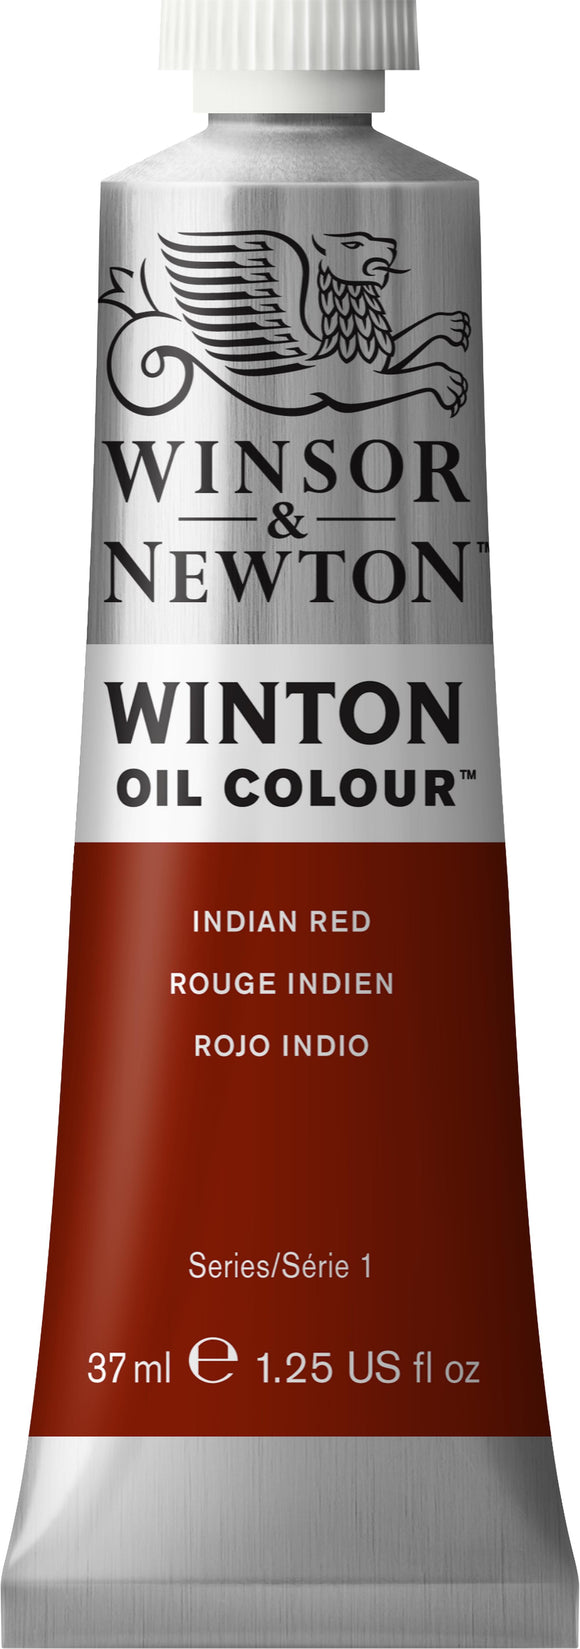 Winsor & Newton Winton Oil Colour Indian Red 37Ml